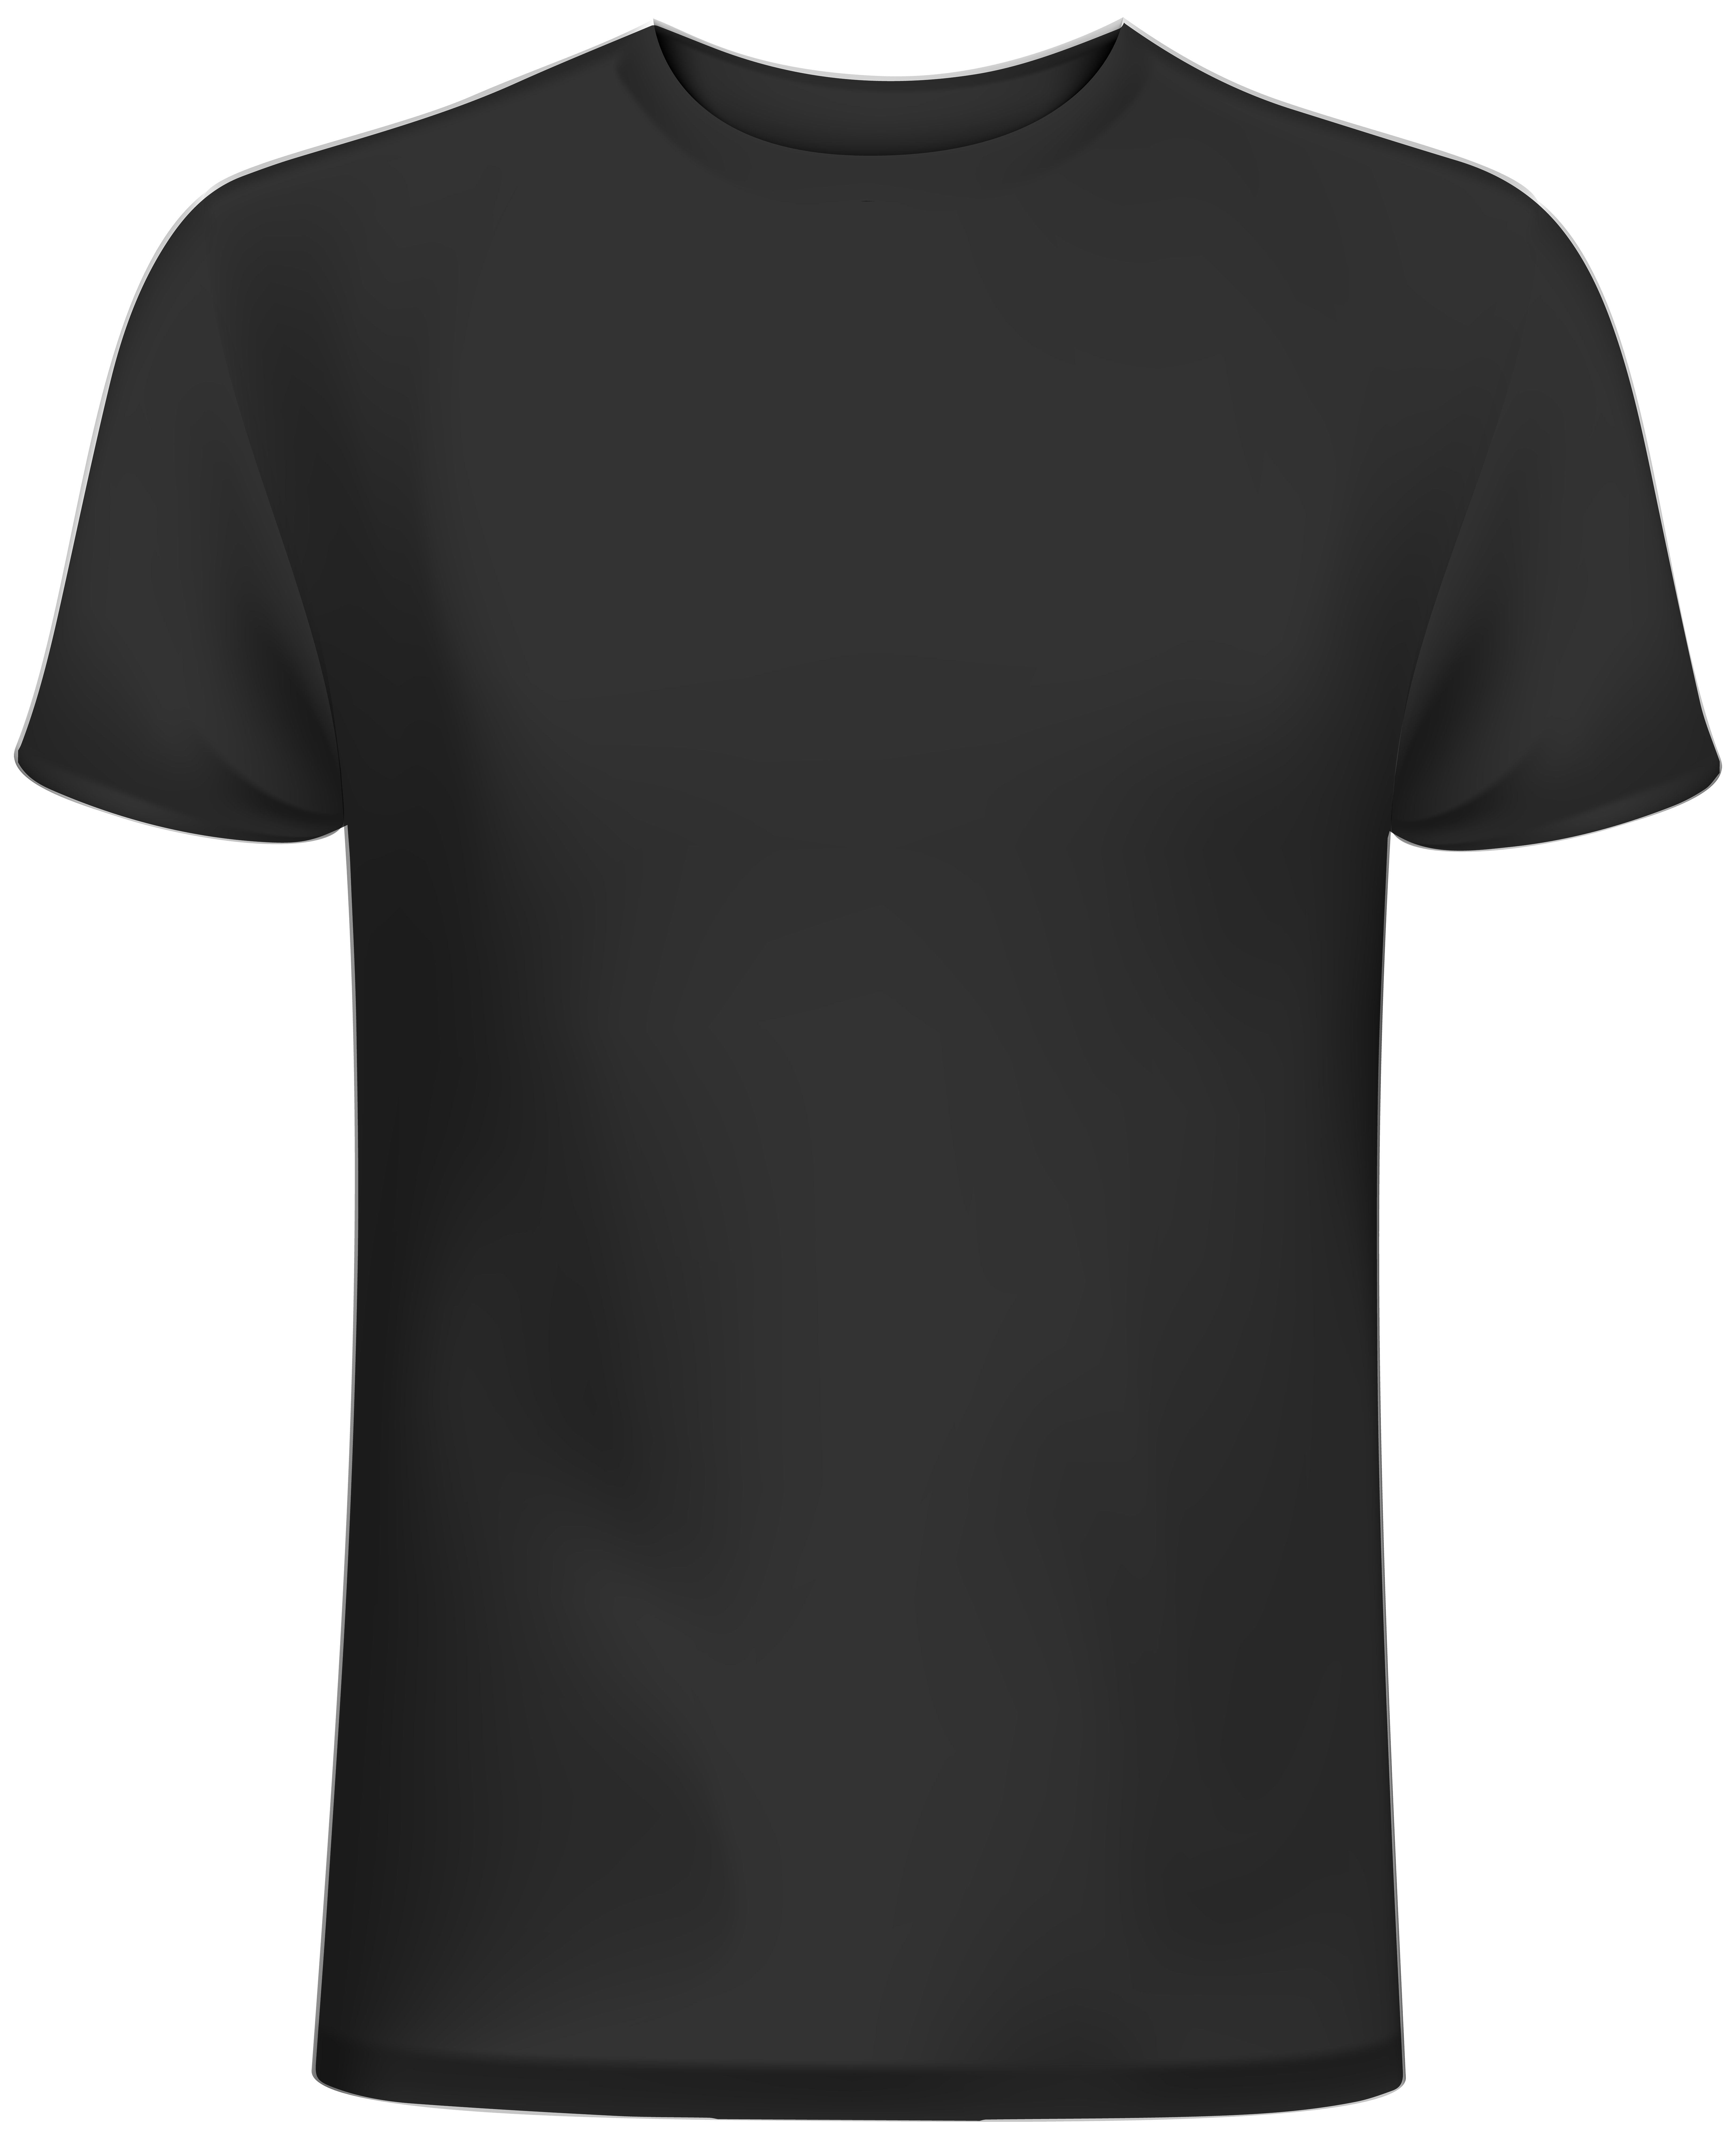 7427+ Plain High Resolution Black T Shirt Template Png File